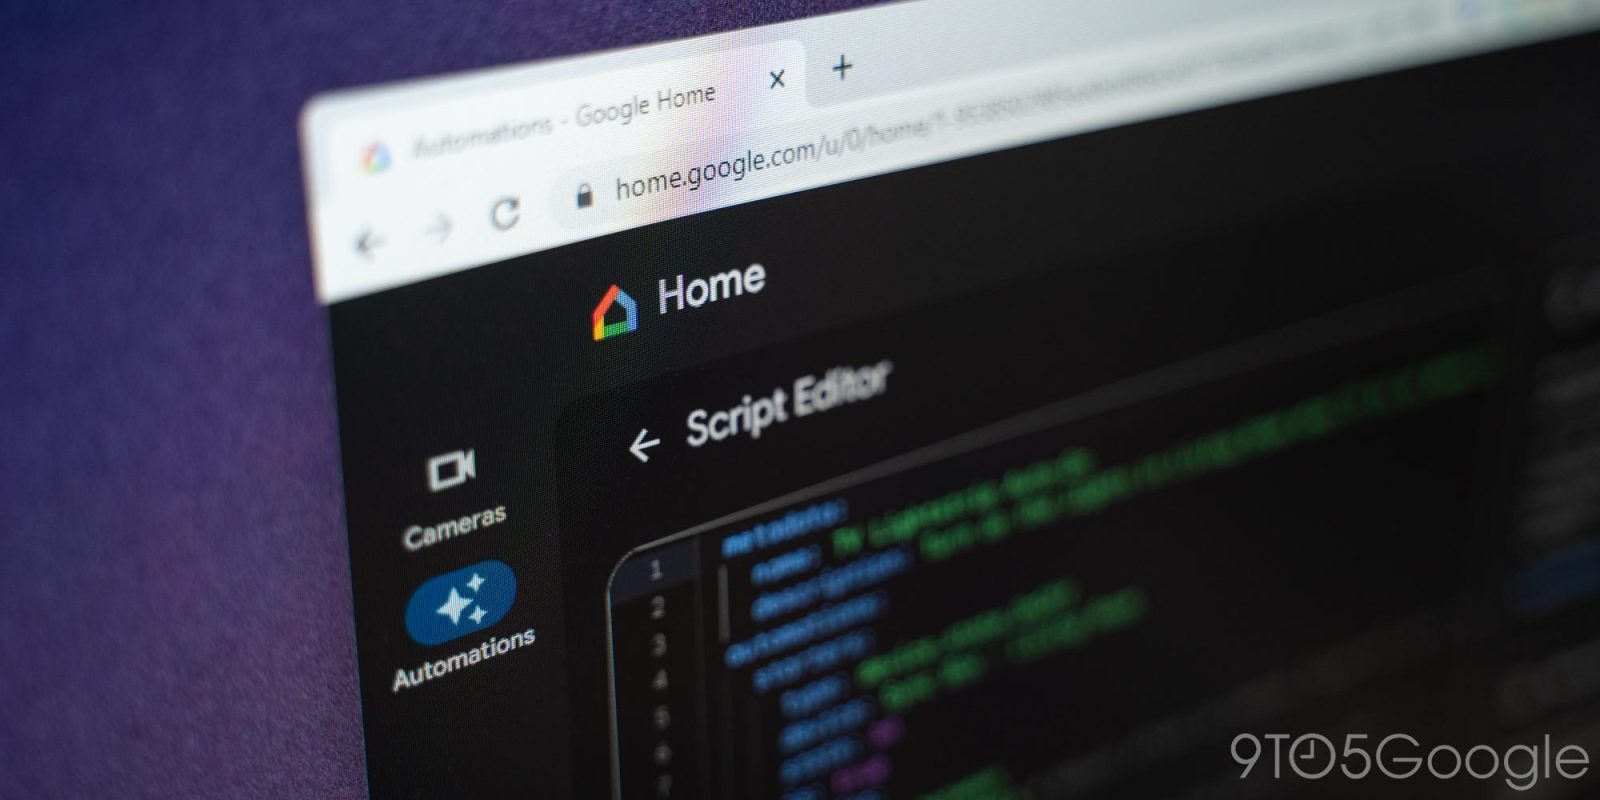 google home script editor